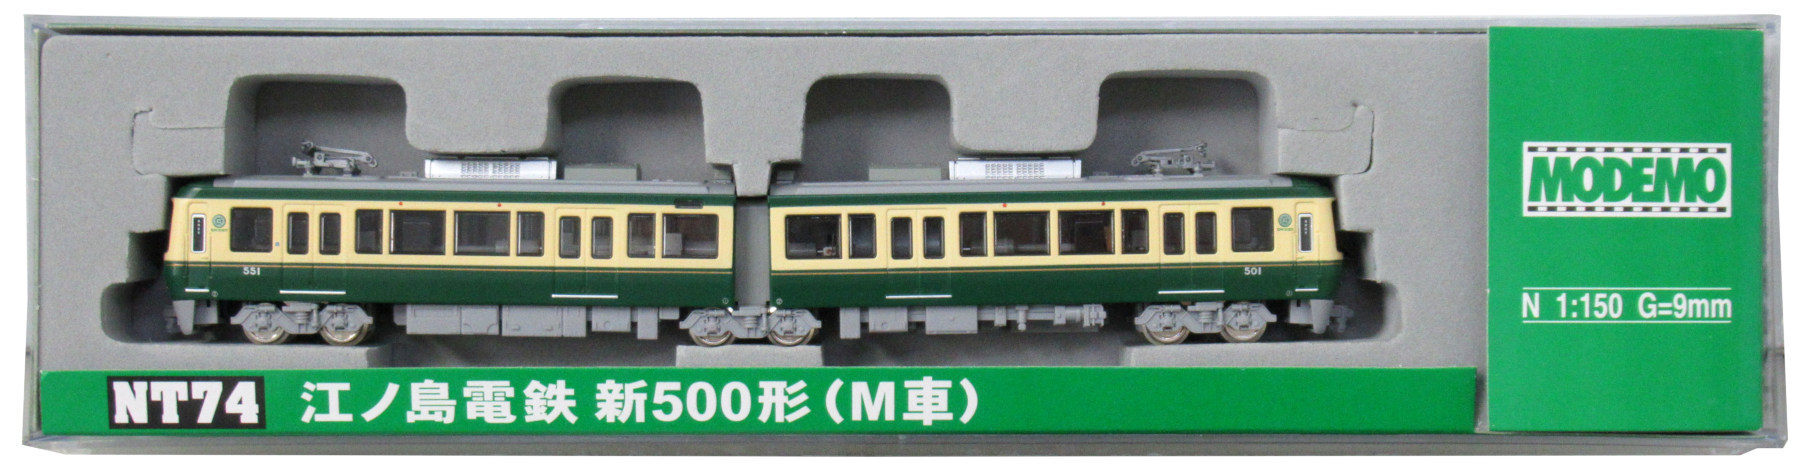 モデモ NT74 江ノ島電鉄 新500形 M車 (江ノ電 鎌倉 藤沢) - 鉄道模型